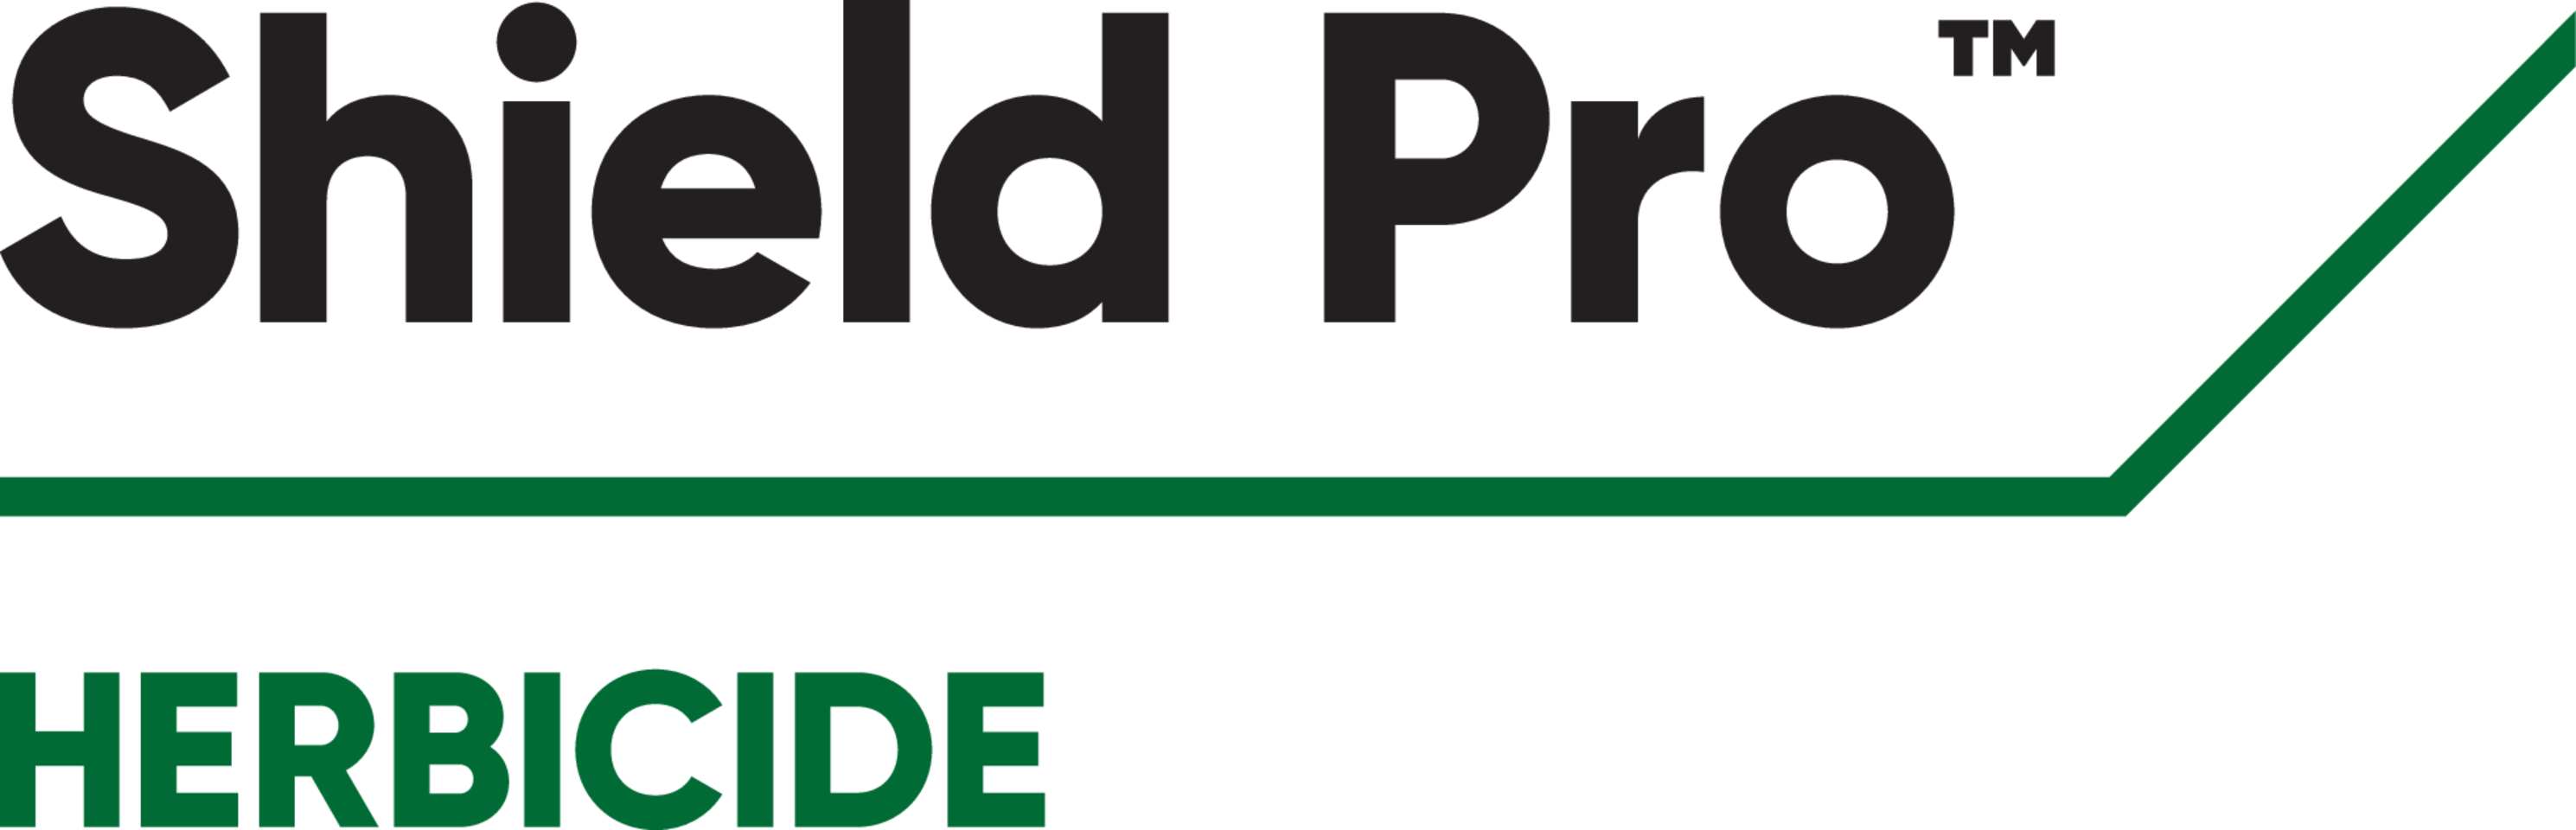 Shield Pro logo